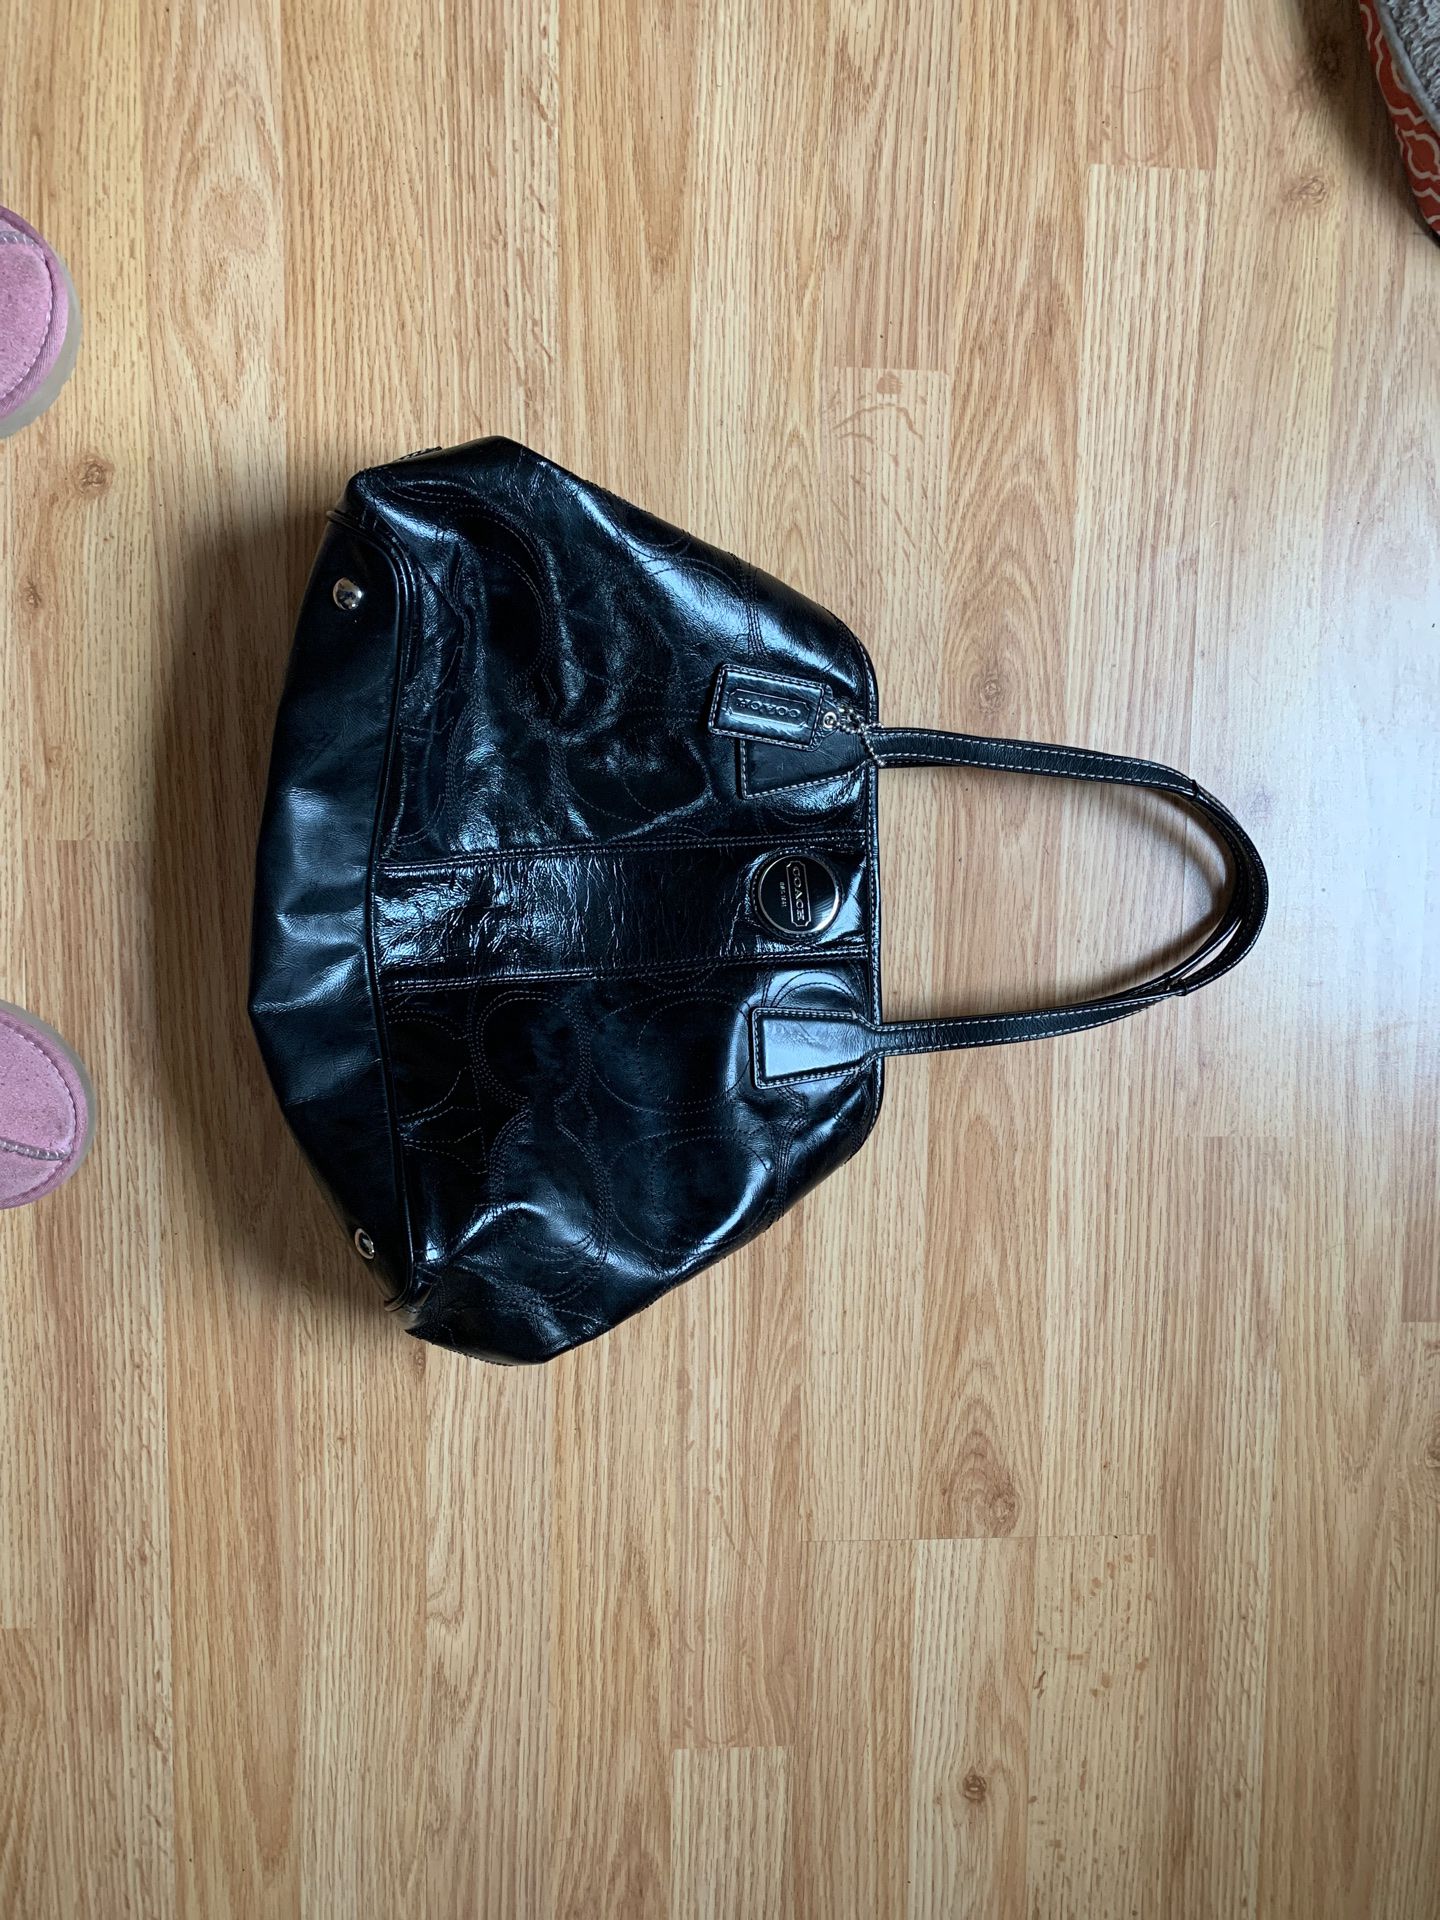 Coach Black handbag